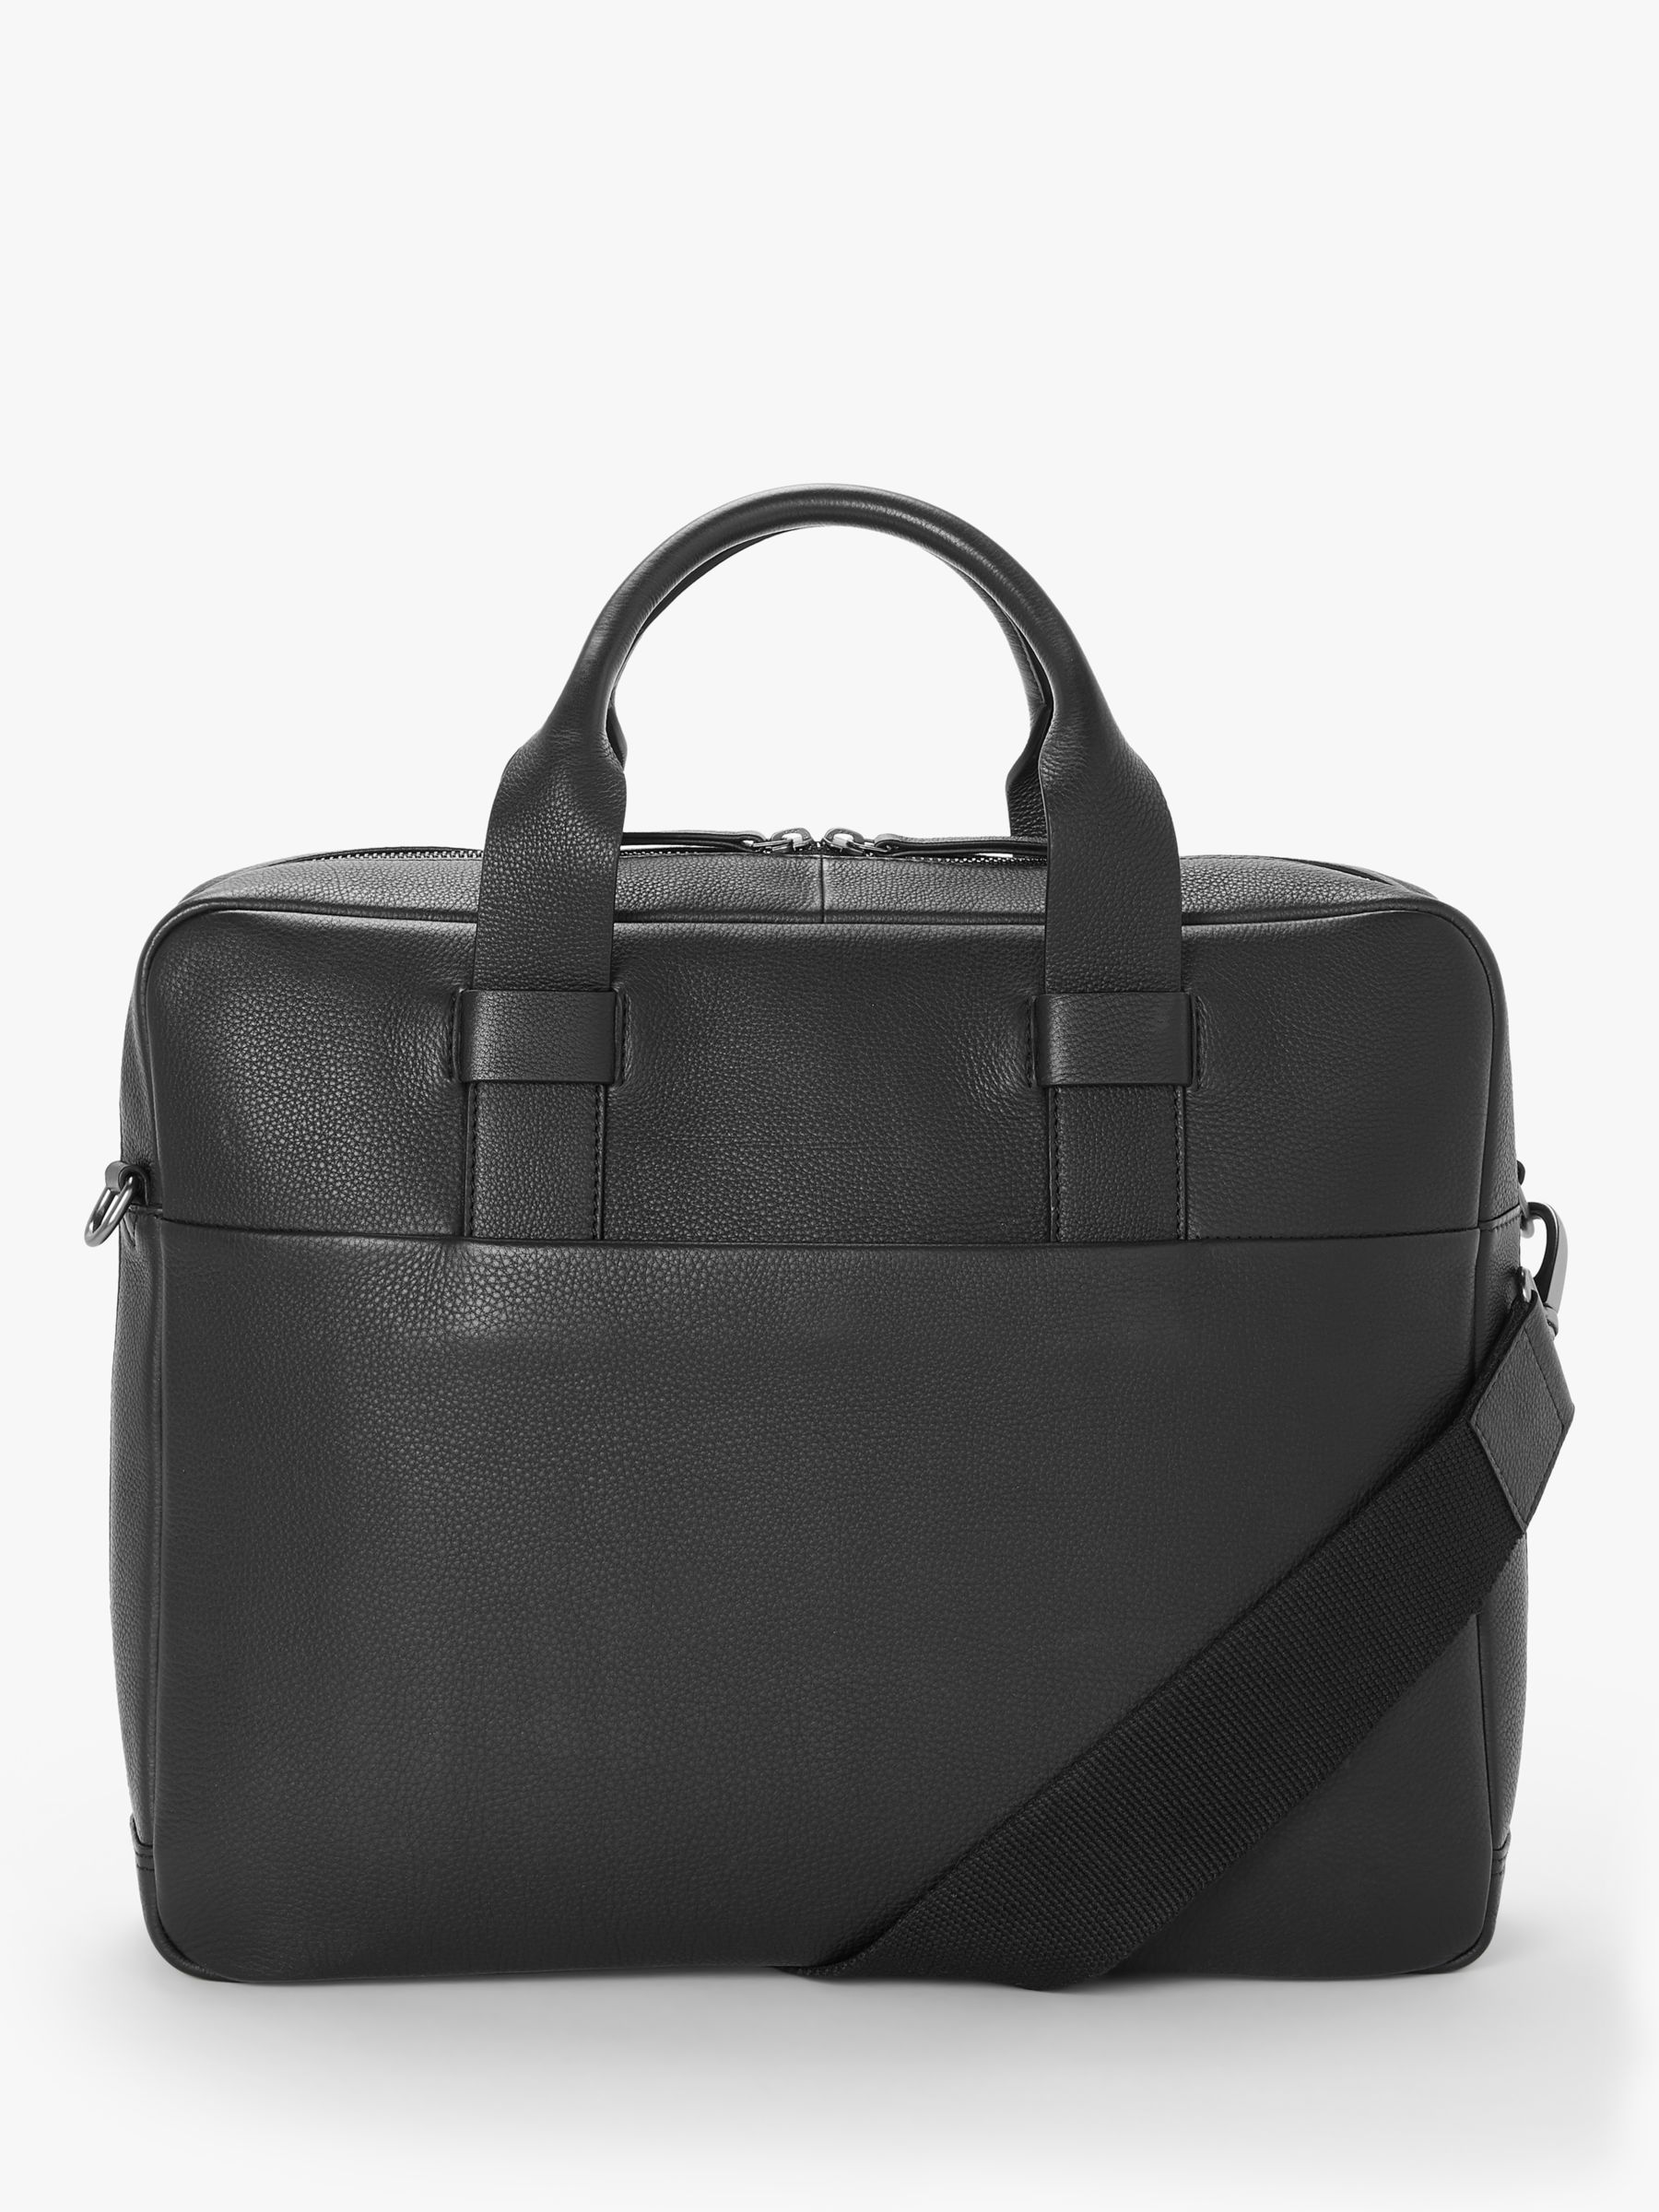 John Lewis Oslo Leather Briefcase, Black at John Lewis & Partners